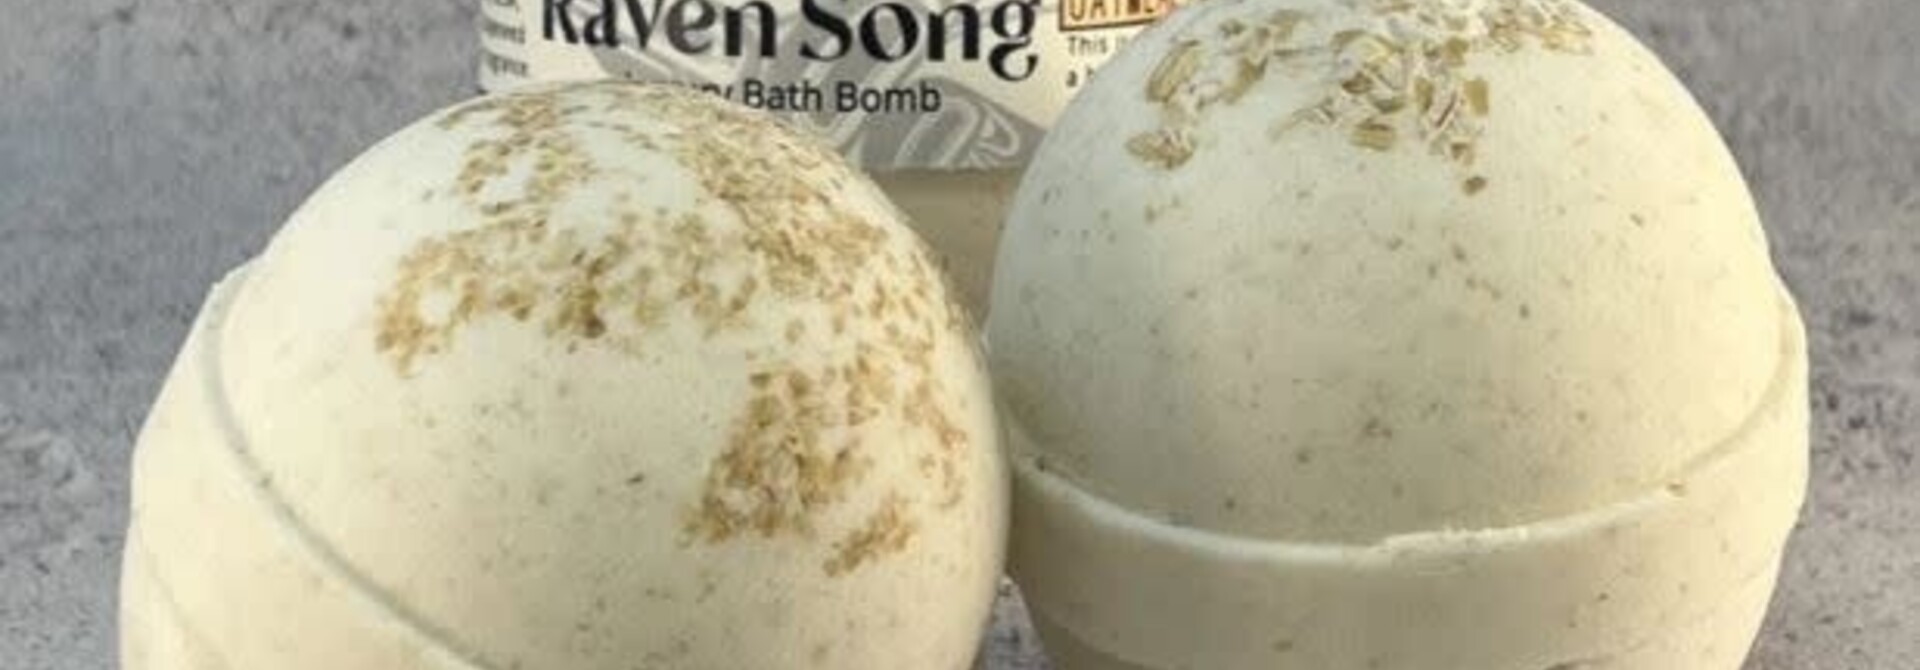 Raven Song Luxury Bath Bomb - Oatmeal Milk & Honey